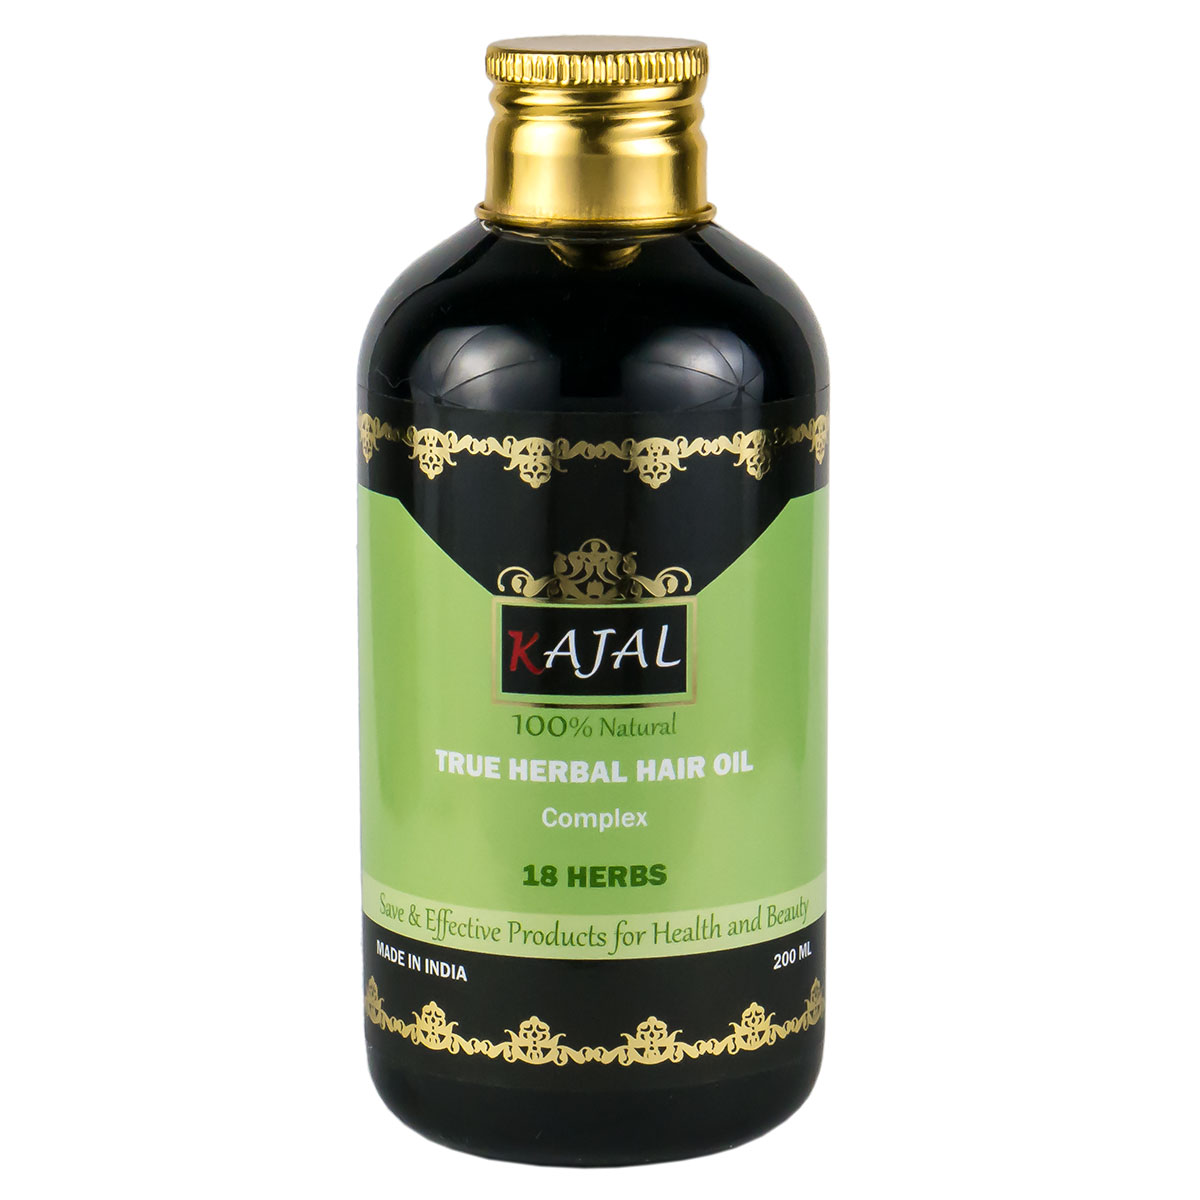 True Herbal Hair Oil  18 HERBS, Complex, Kajal (Травяное комплексное масло для волос 18 ТРАВ, Каджал), 200 мл. - СРОК ГОДНОСТИ ПО ОКТЯБРЬ 2023 ГОДА